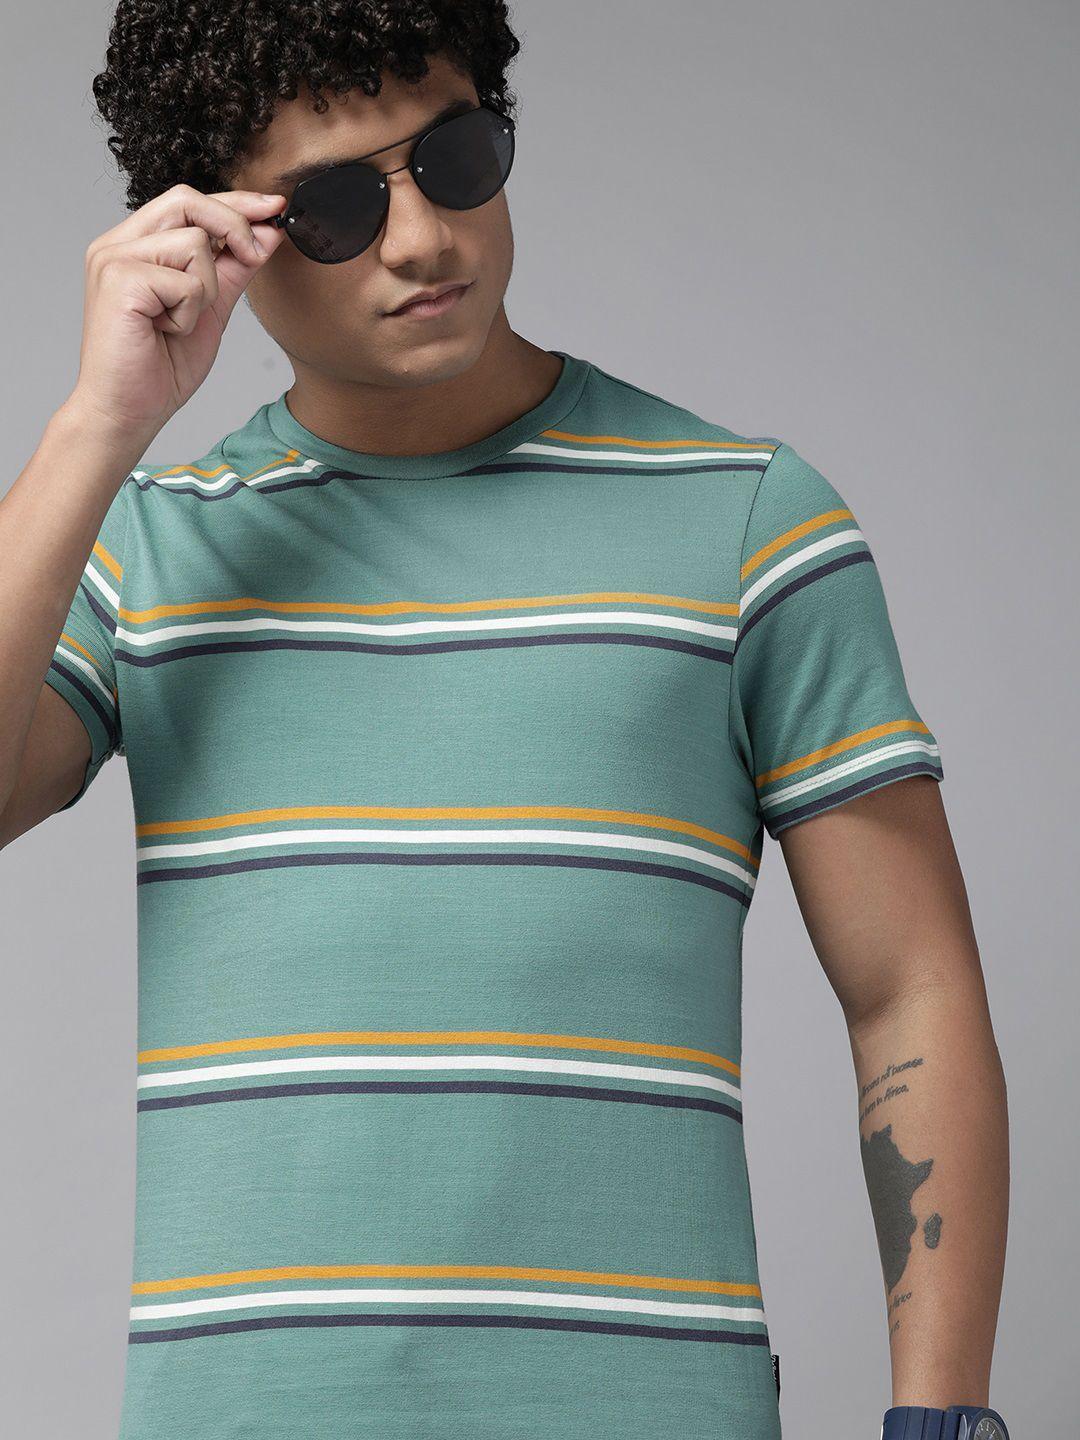 the roadster lifestyle co. men sea green & white striped pure cotton t-shirt